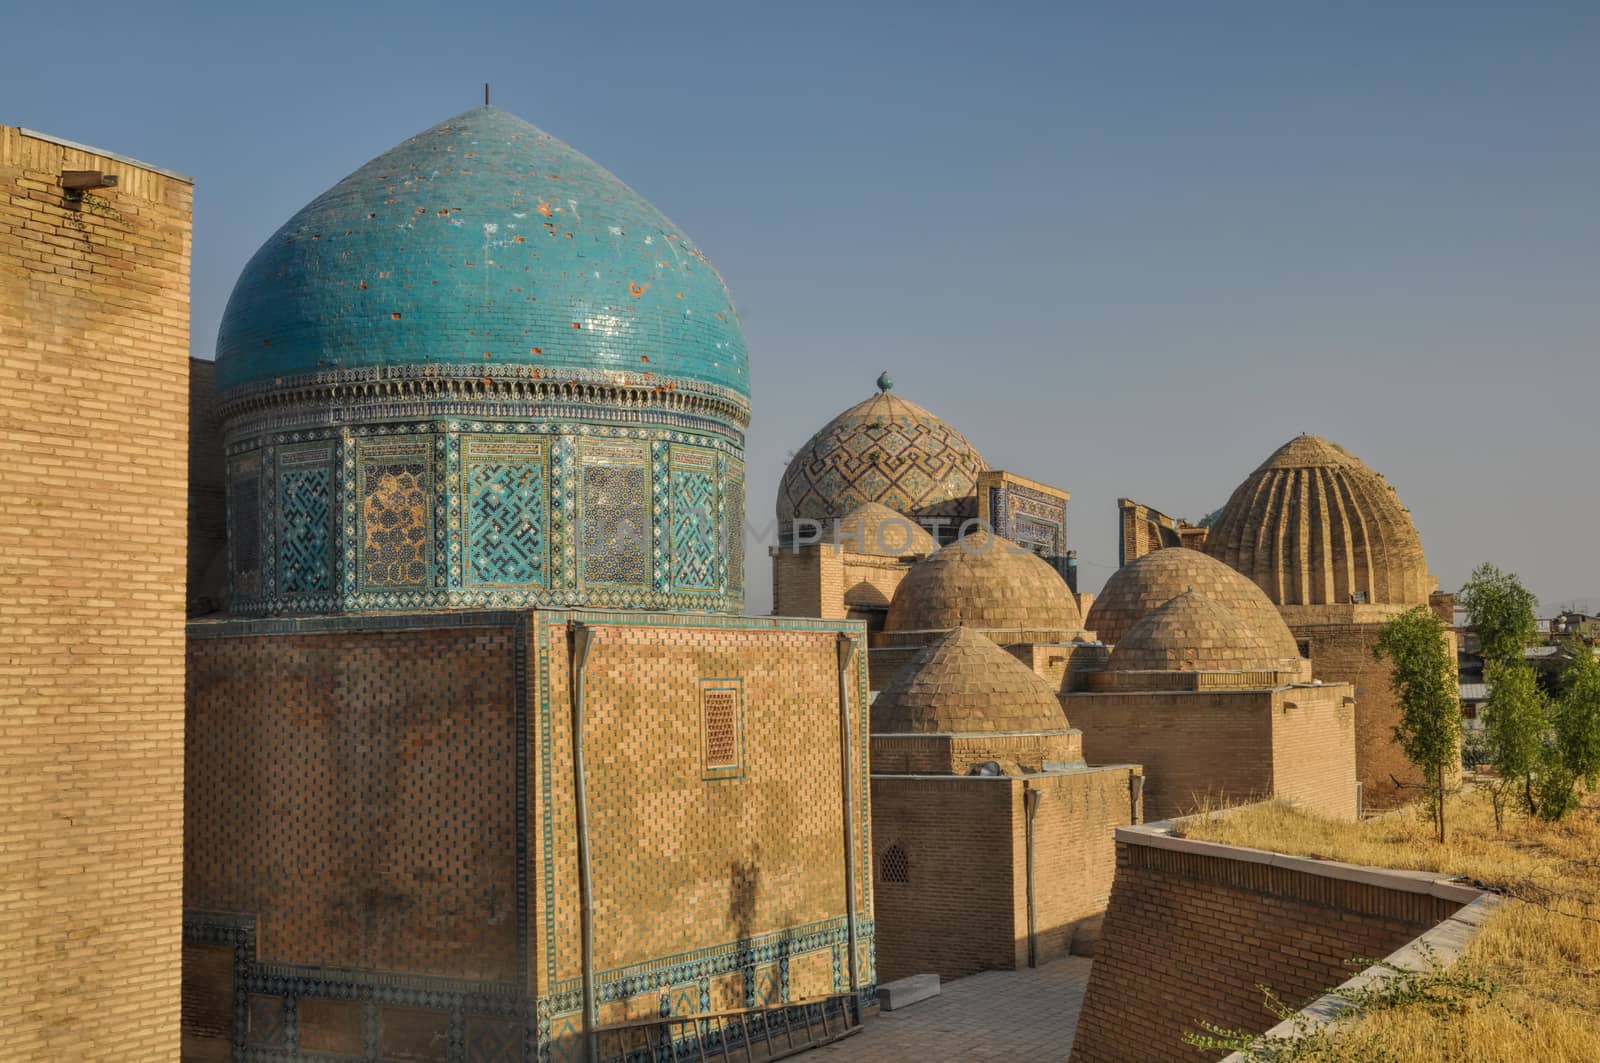 Beautifully decorated domes in Samarkand, Uzbekistan